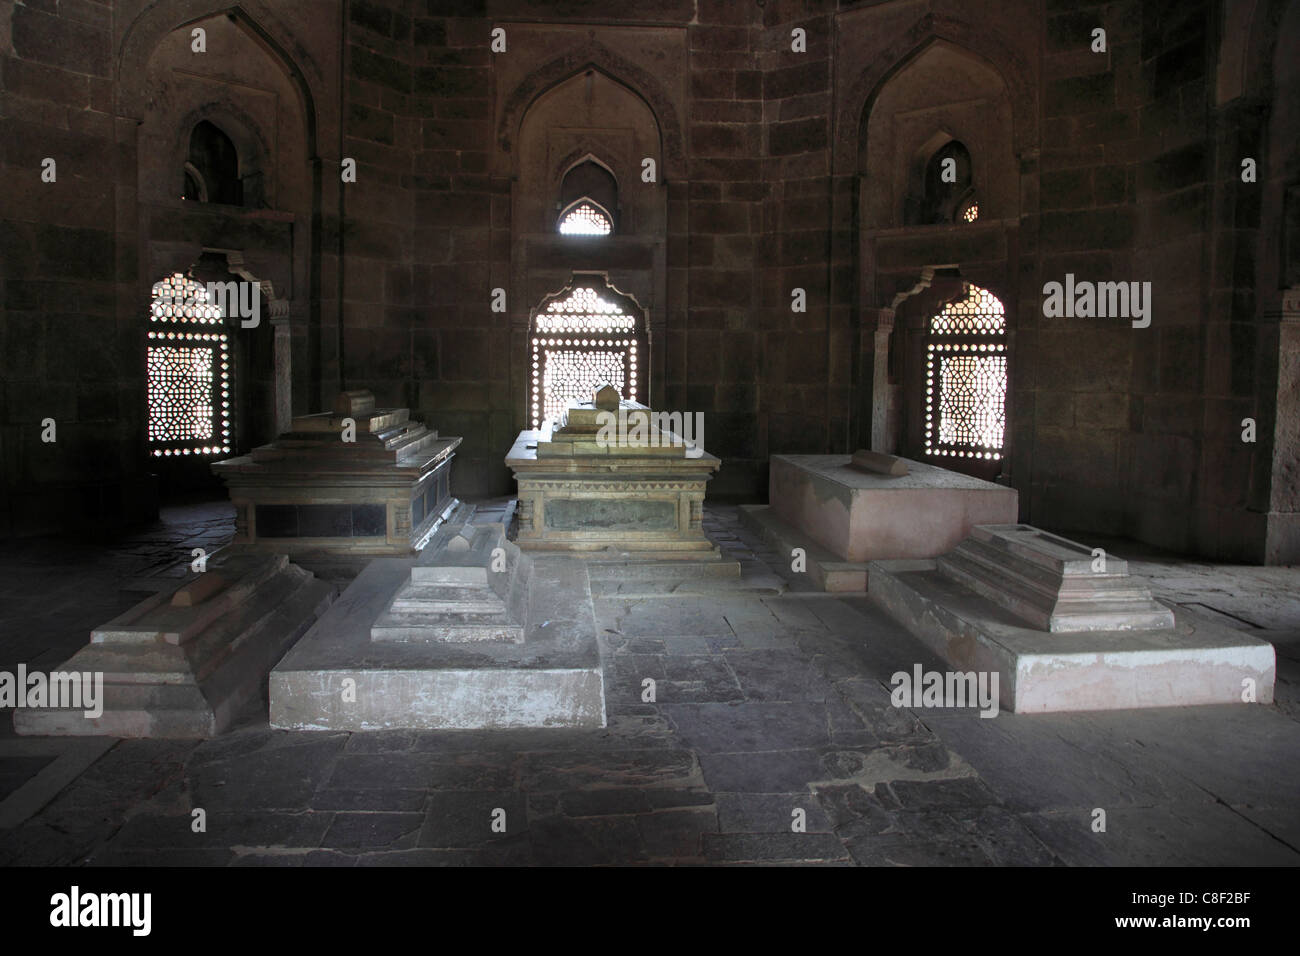 Chambre tombe, Tombe de Humayun, UNESCO World Heritage Site, New Delhi, Inde Banque D'Images